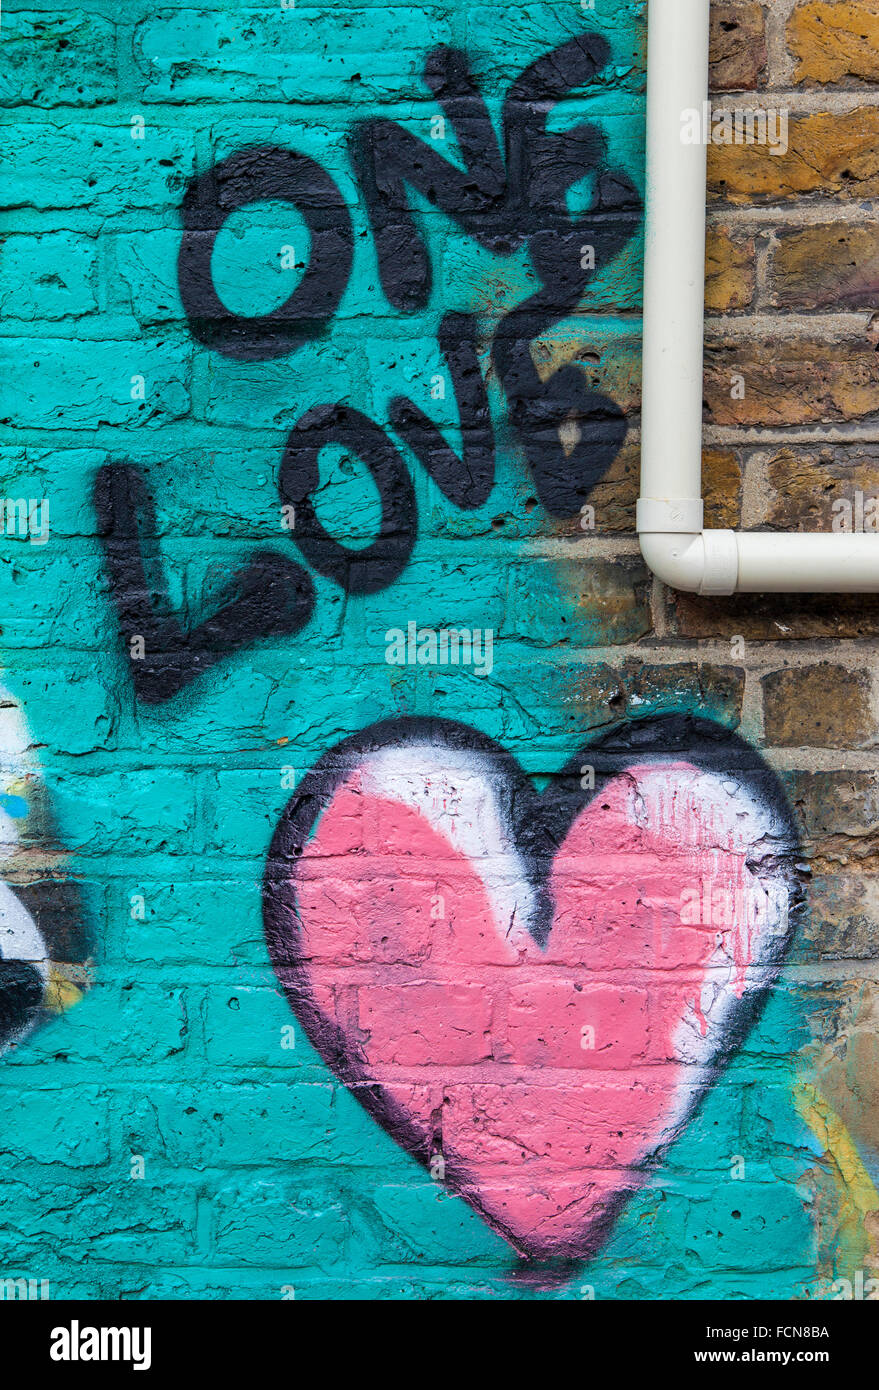 LONDON, UK - JANUARY 13TH 2016: An abstract piece of graffiti on a brick wall symbolising love, on 13th January 2016. Stock Photo